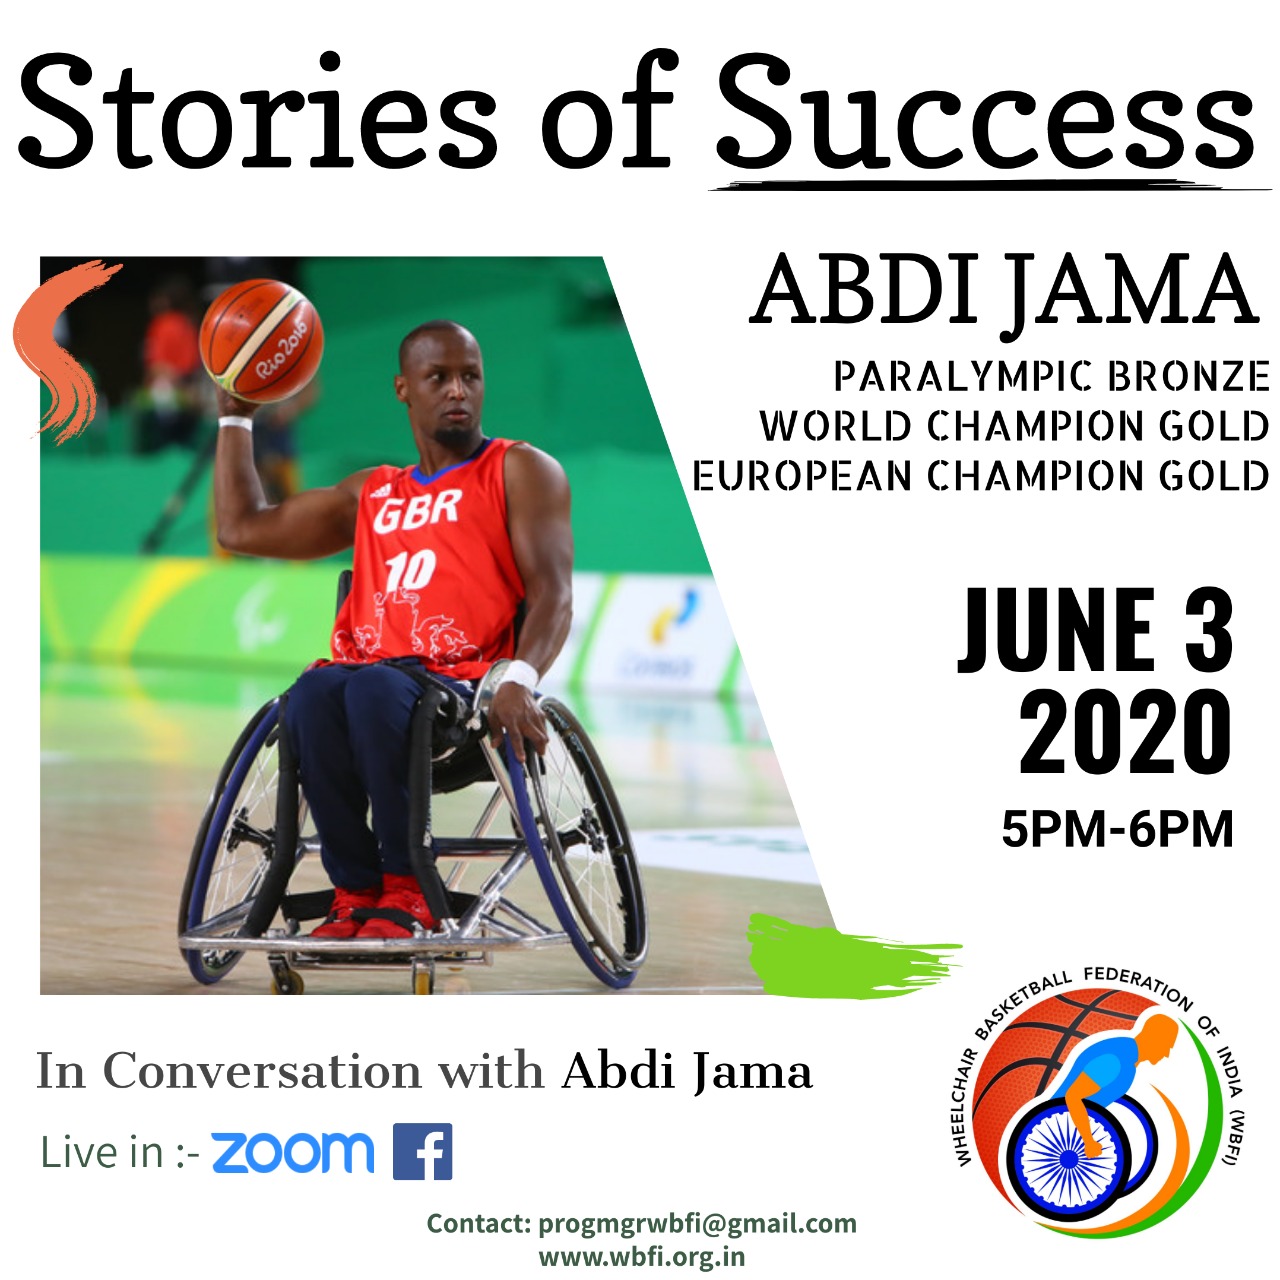 Stories of Success - Conversation with Abdi Jama